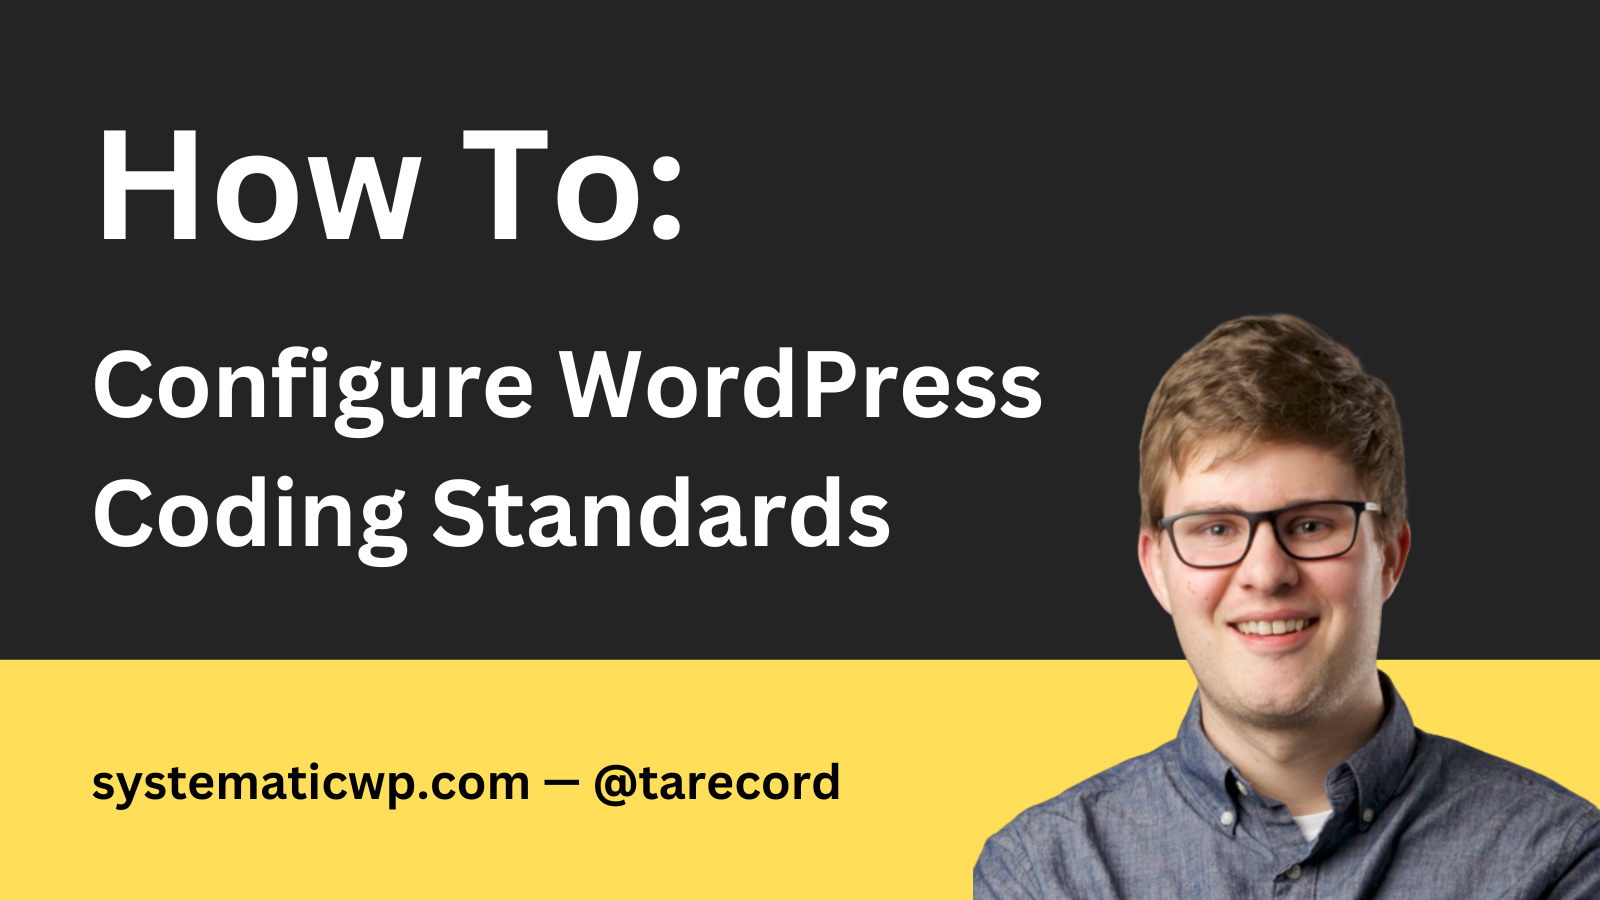 How to: Configure WordPress Coding Standards